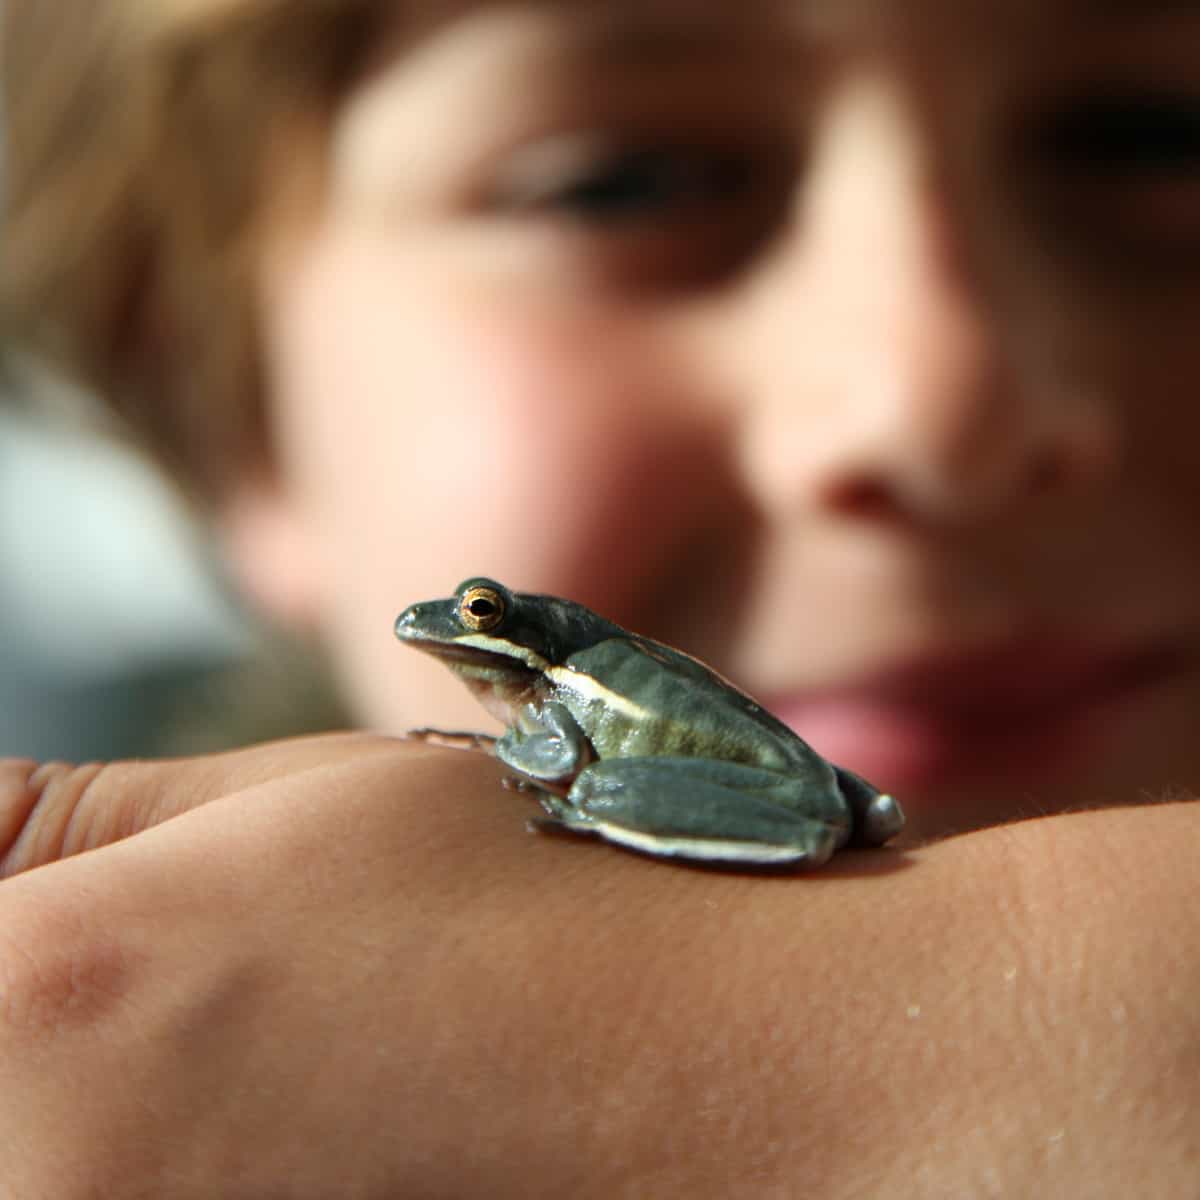 Frog sitting on boy's hand.